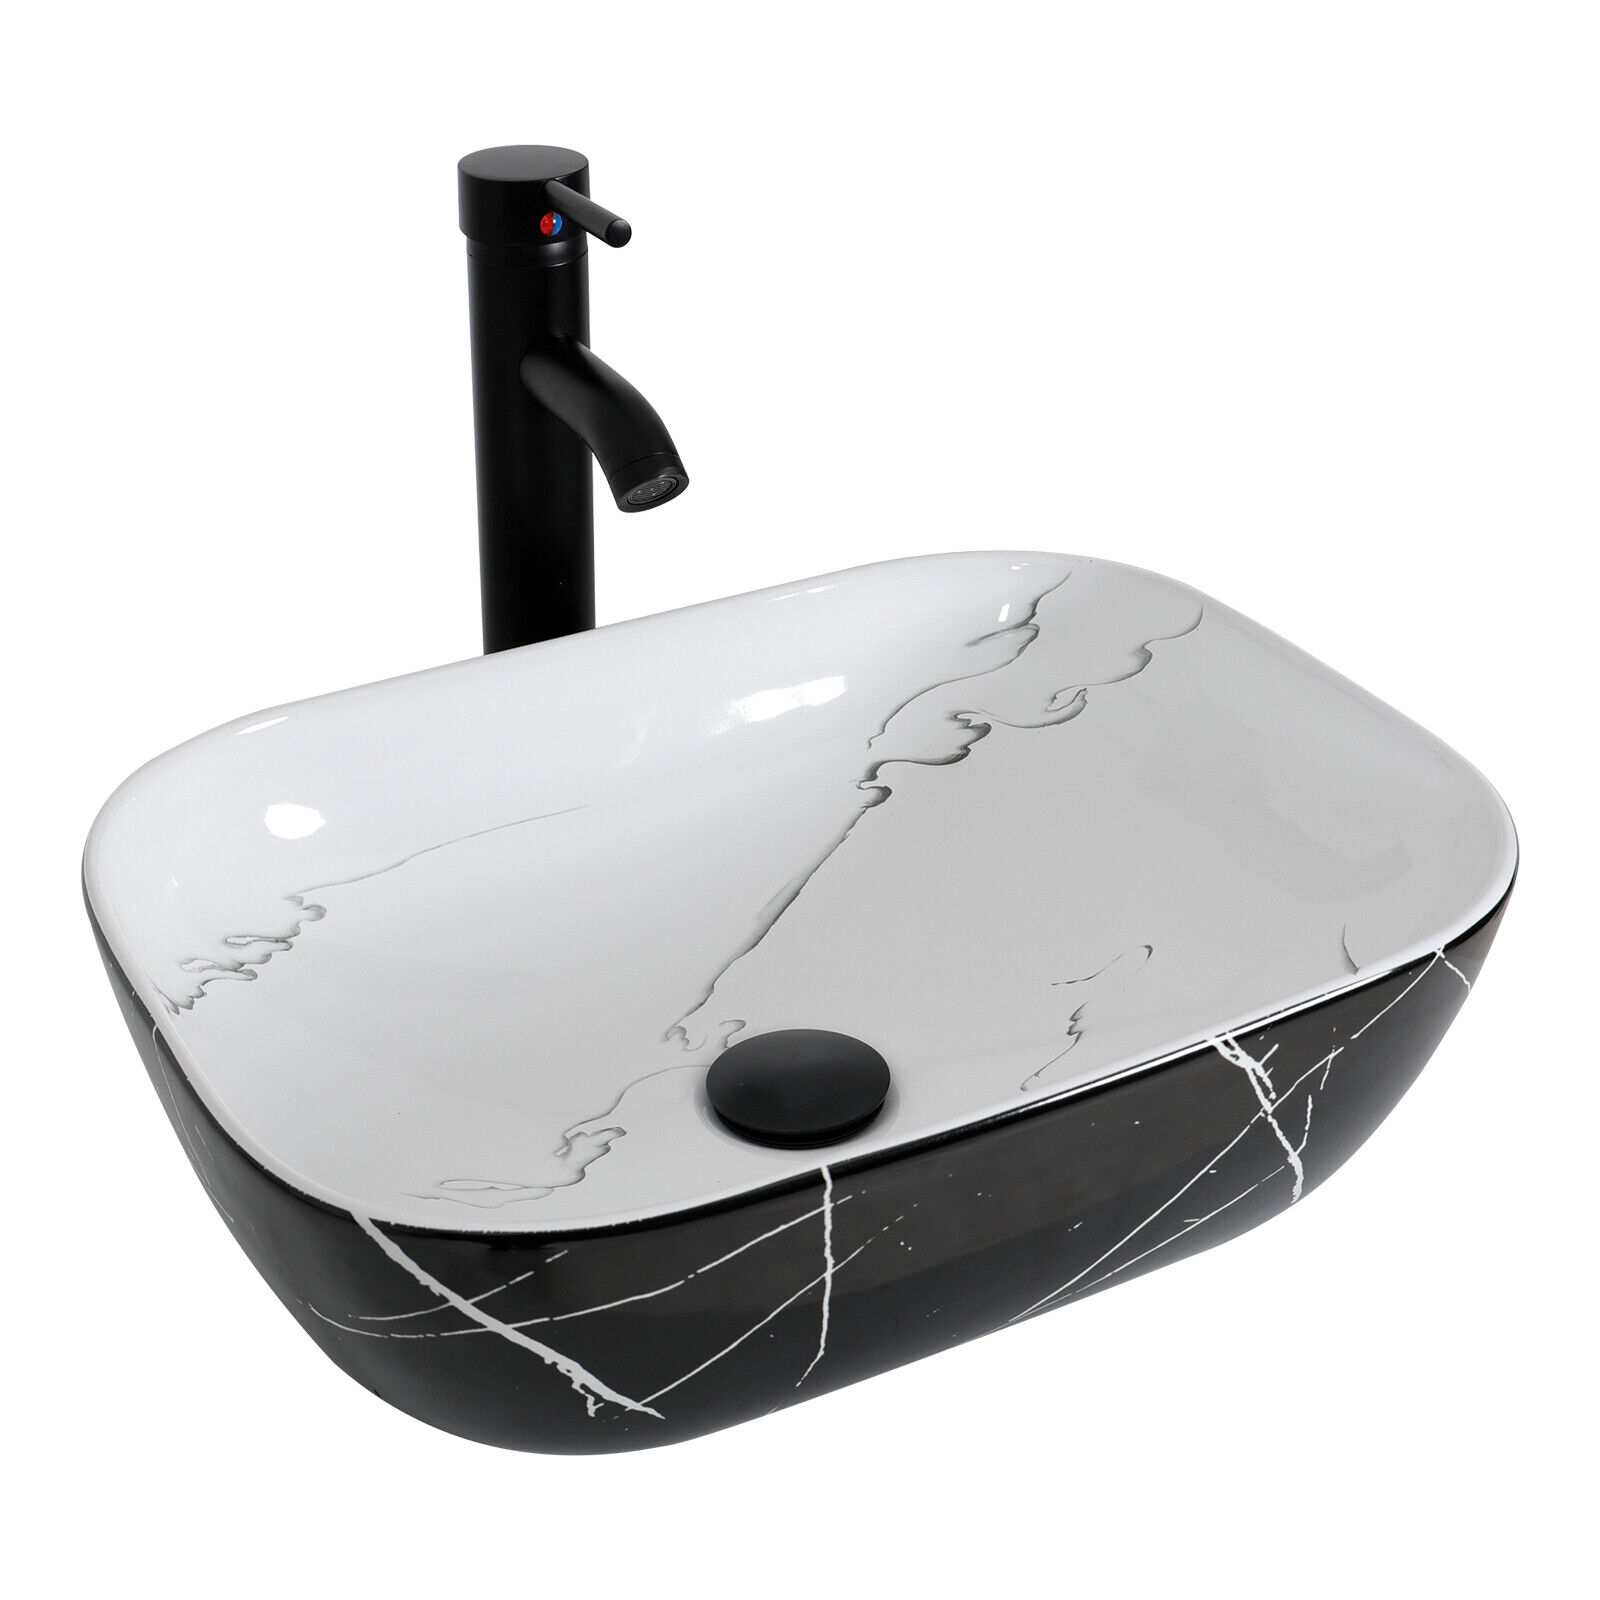 ELECWISH Bathroom Vessel Sink Ceramic Vanity Basin Bowl with Faucet Pop Up Drain